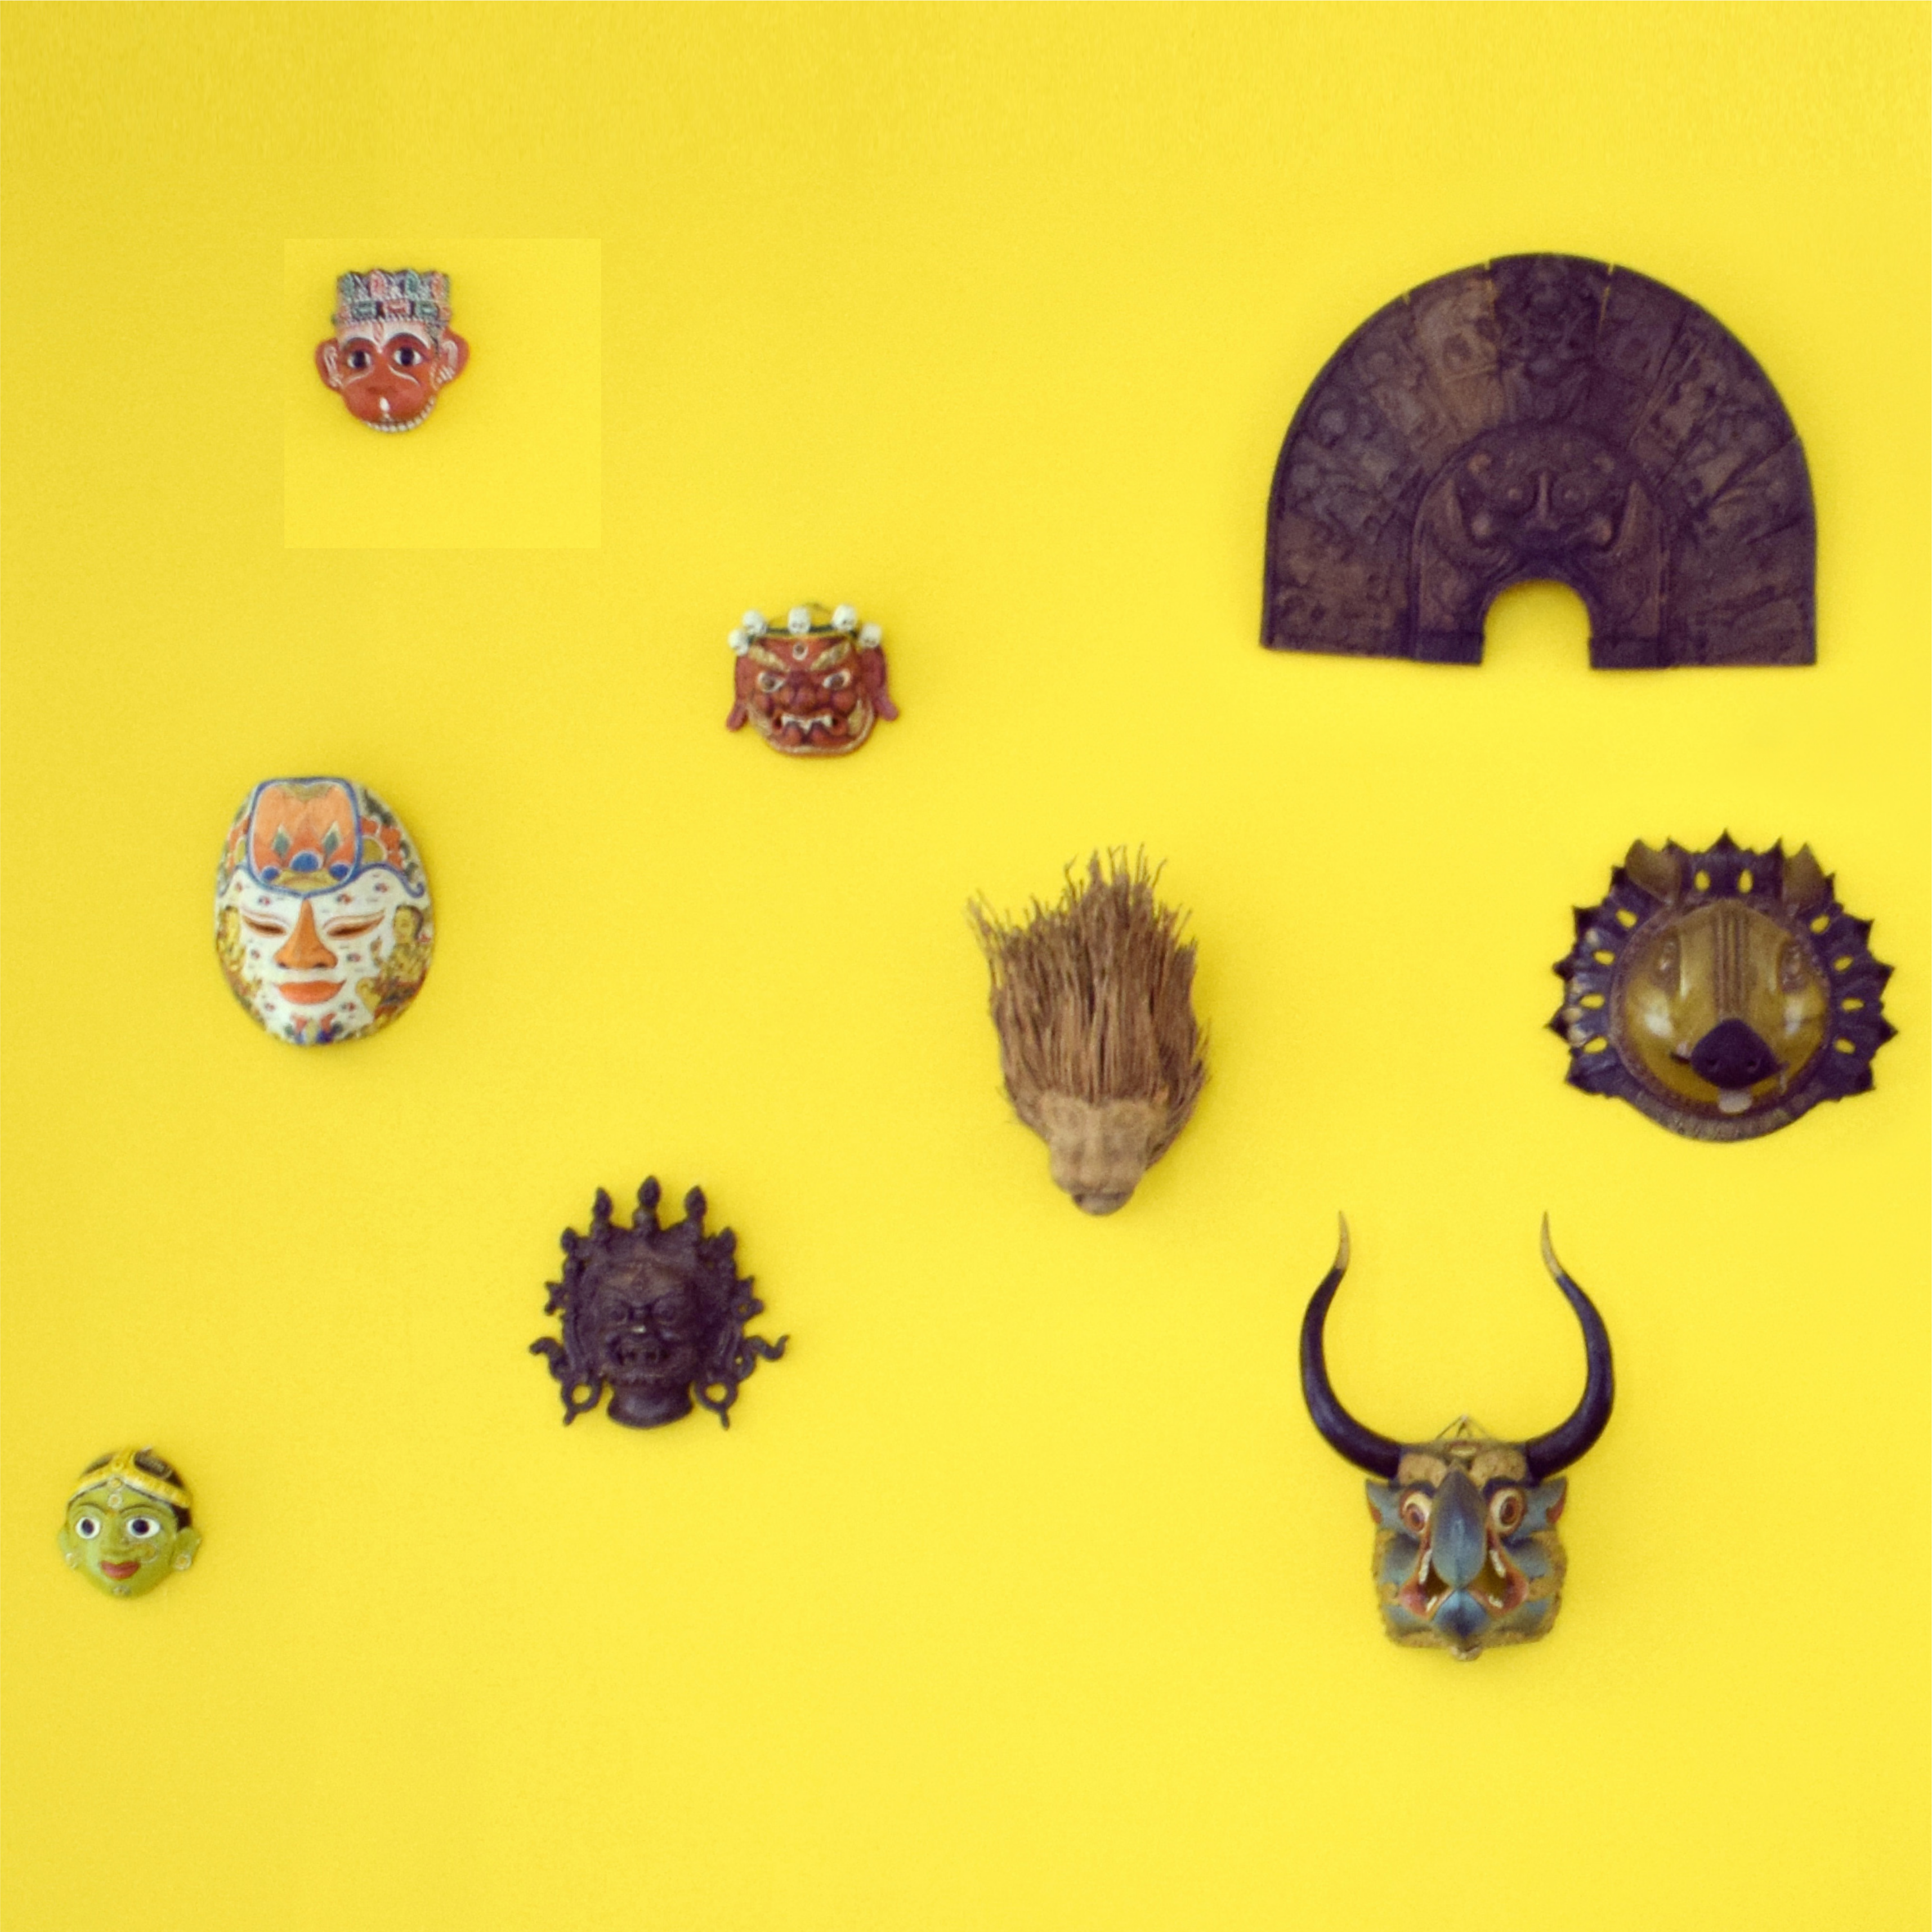 crafted, artist, handmade, mask, wooden mask, wall decor